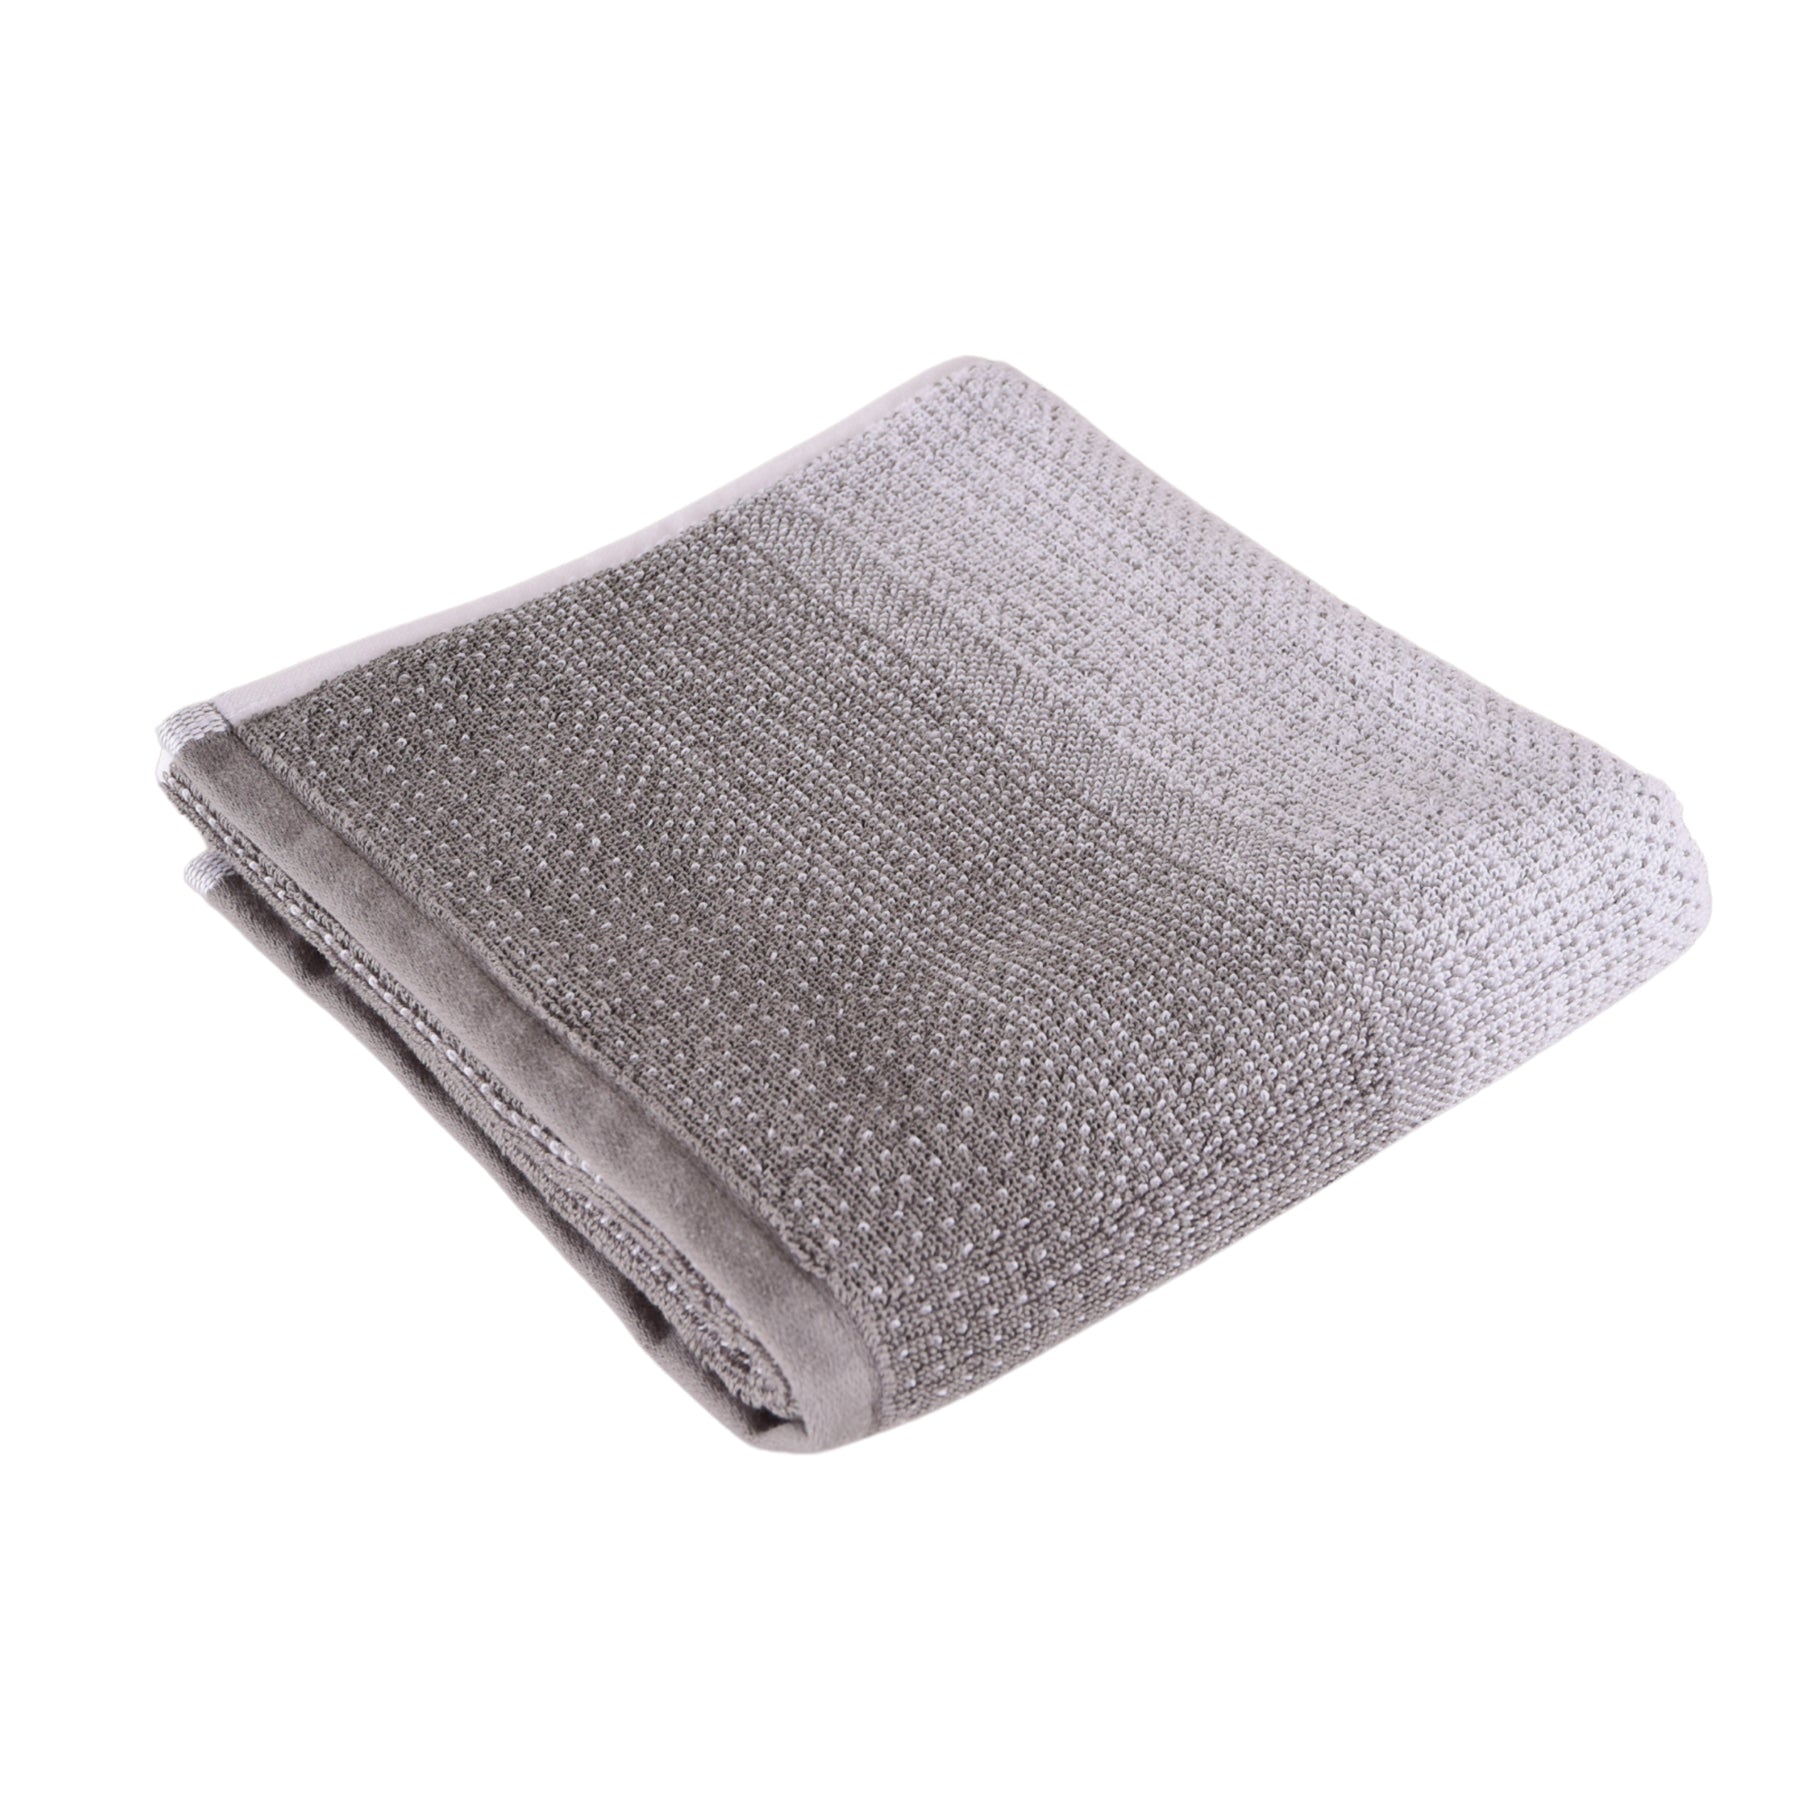 Stripe line towel 50x100 cm